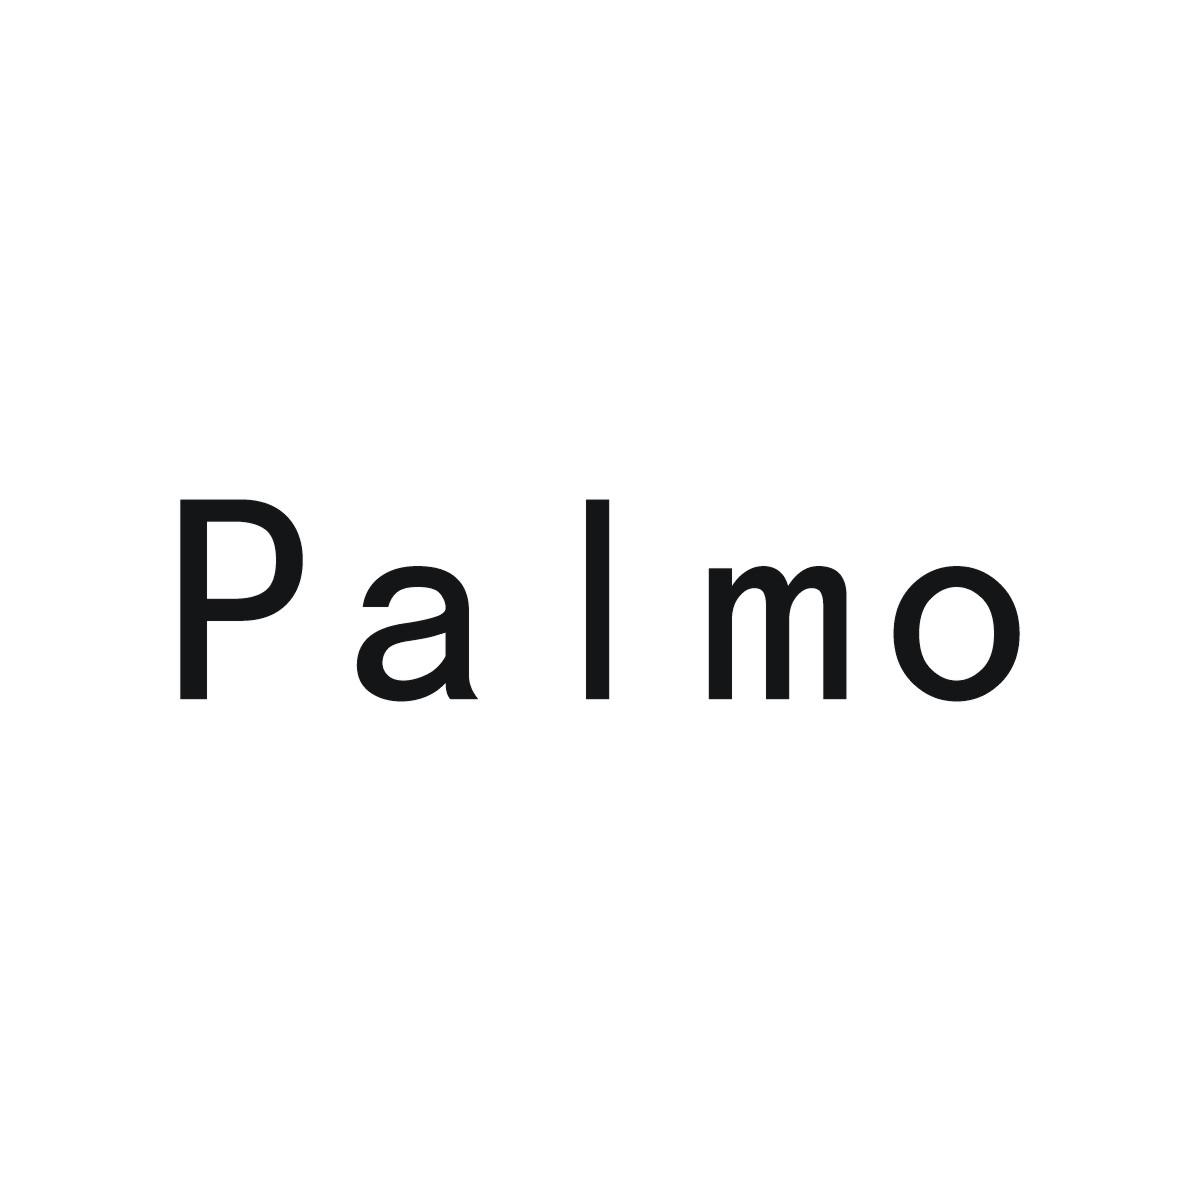 PALMO商标转让